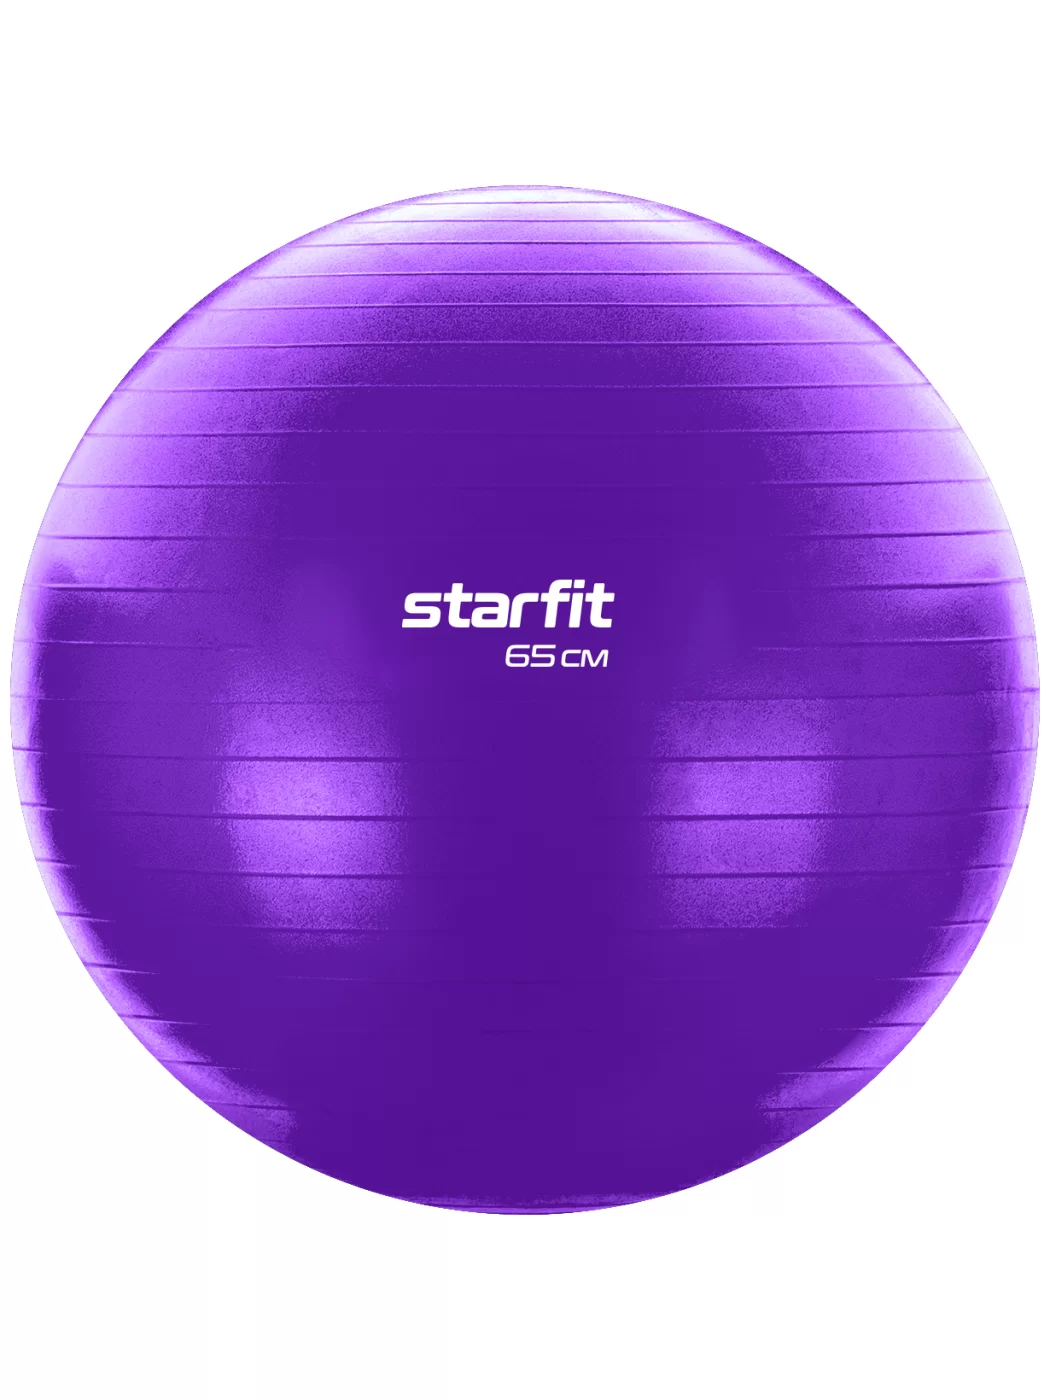 Фото Фитбол 65 см StarFit GB-108 антивзрыв фиолетовый УТ-00020575 со склада магазина СпортСЕ